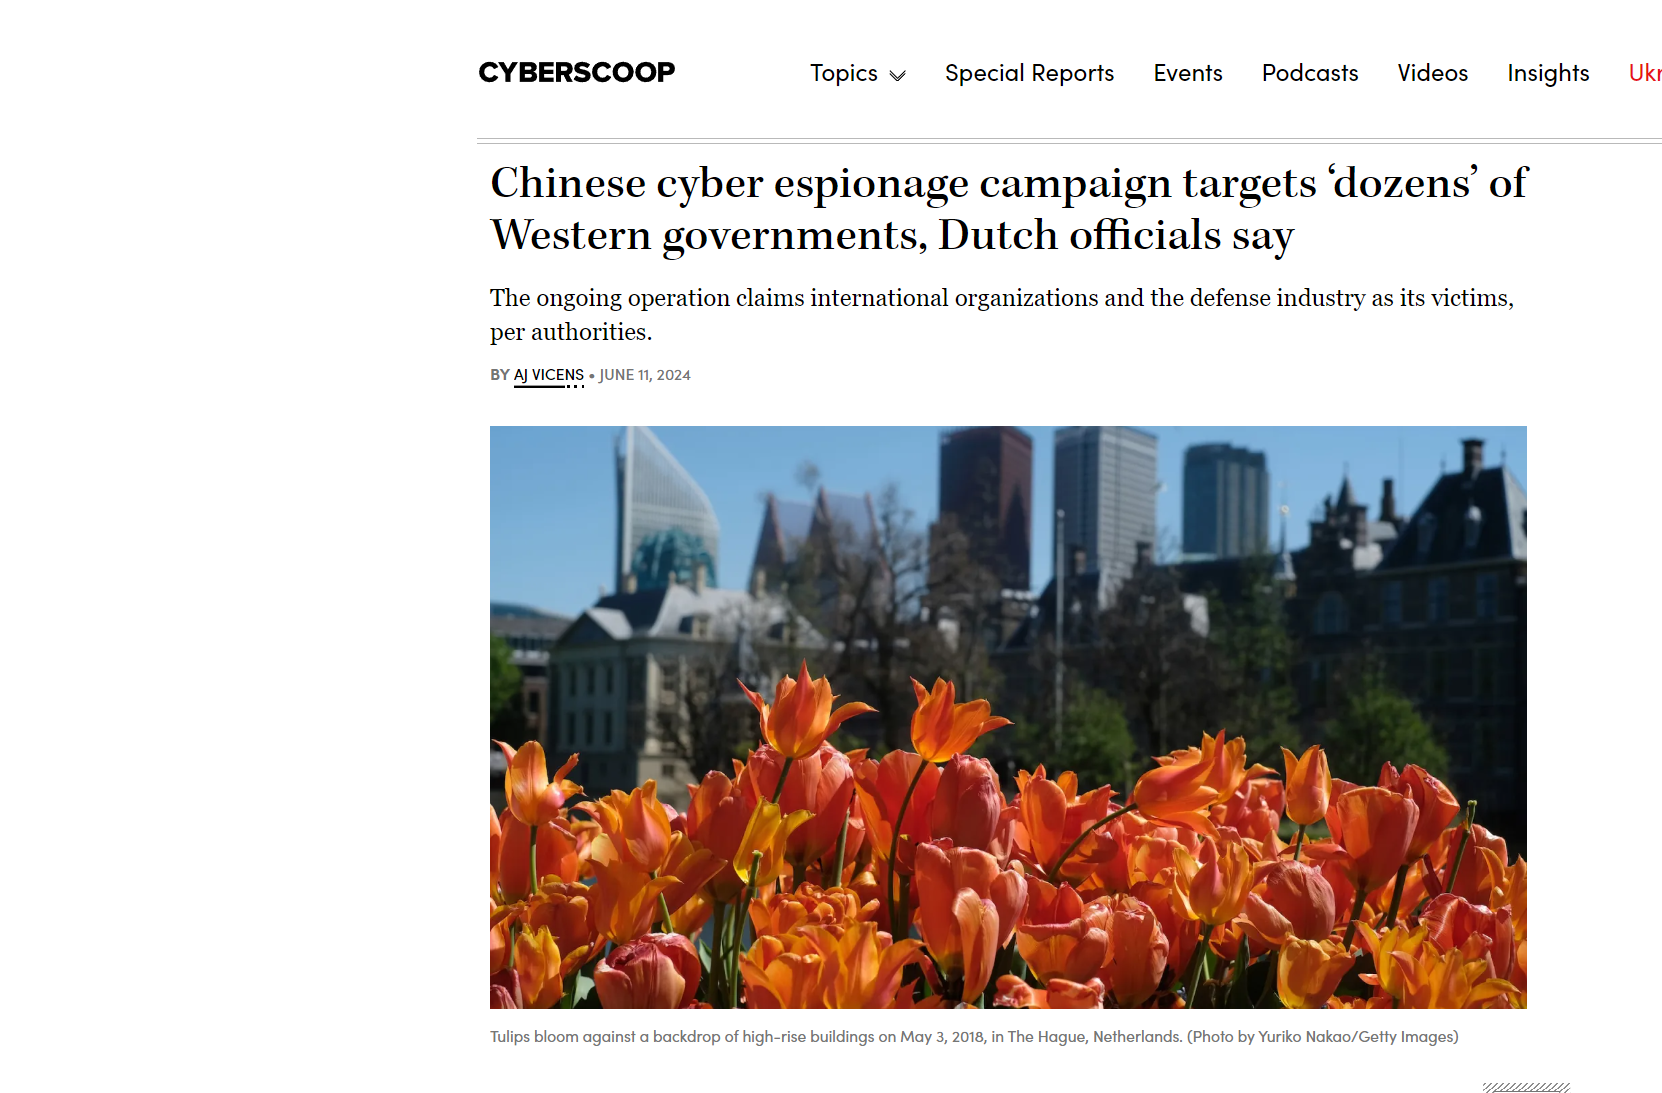 CyberScoop: Η κινεζική εκστρατεία κυβερνοκατασκοπείας στοχεύει «δεκάδες» δυτικές κυβερνήσεις